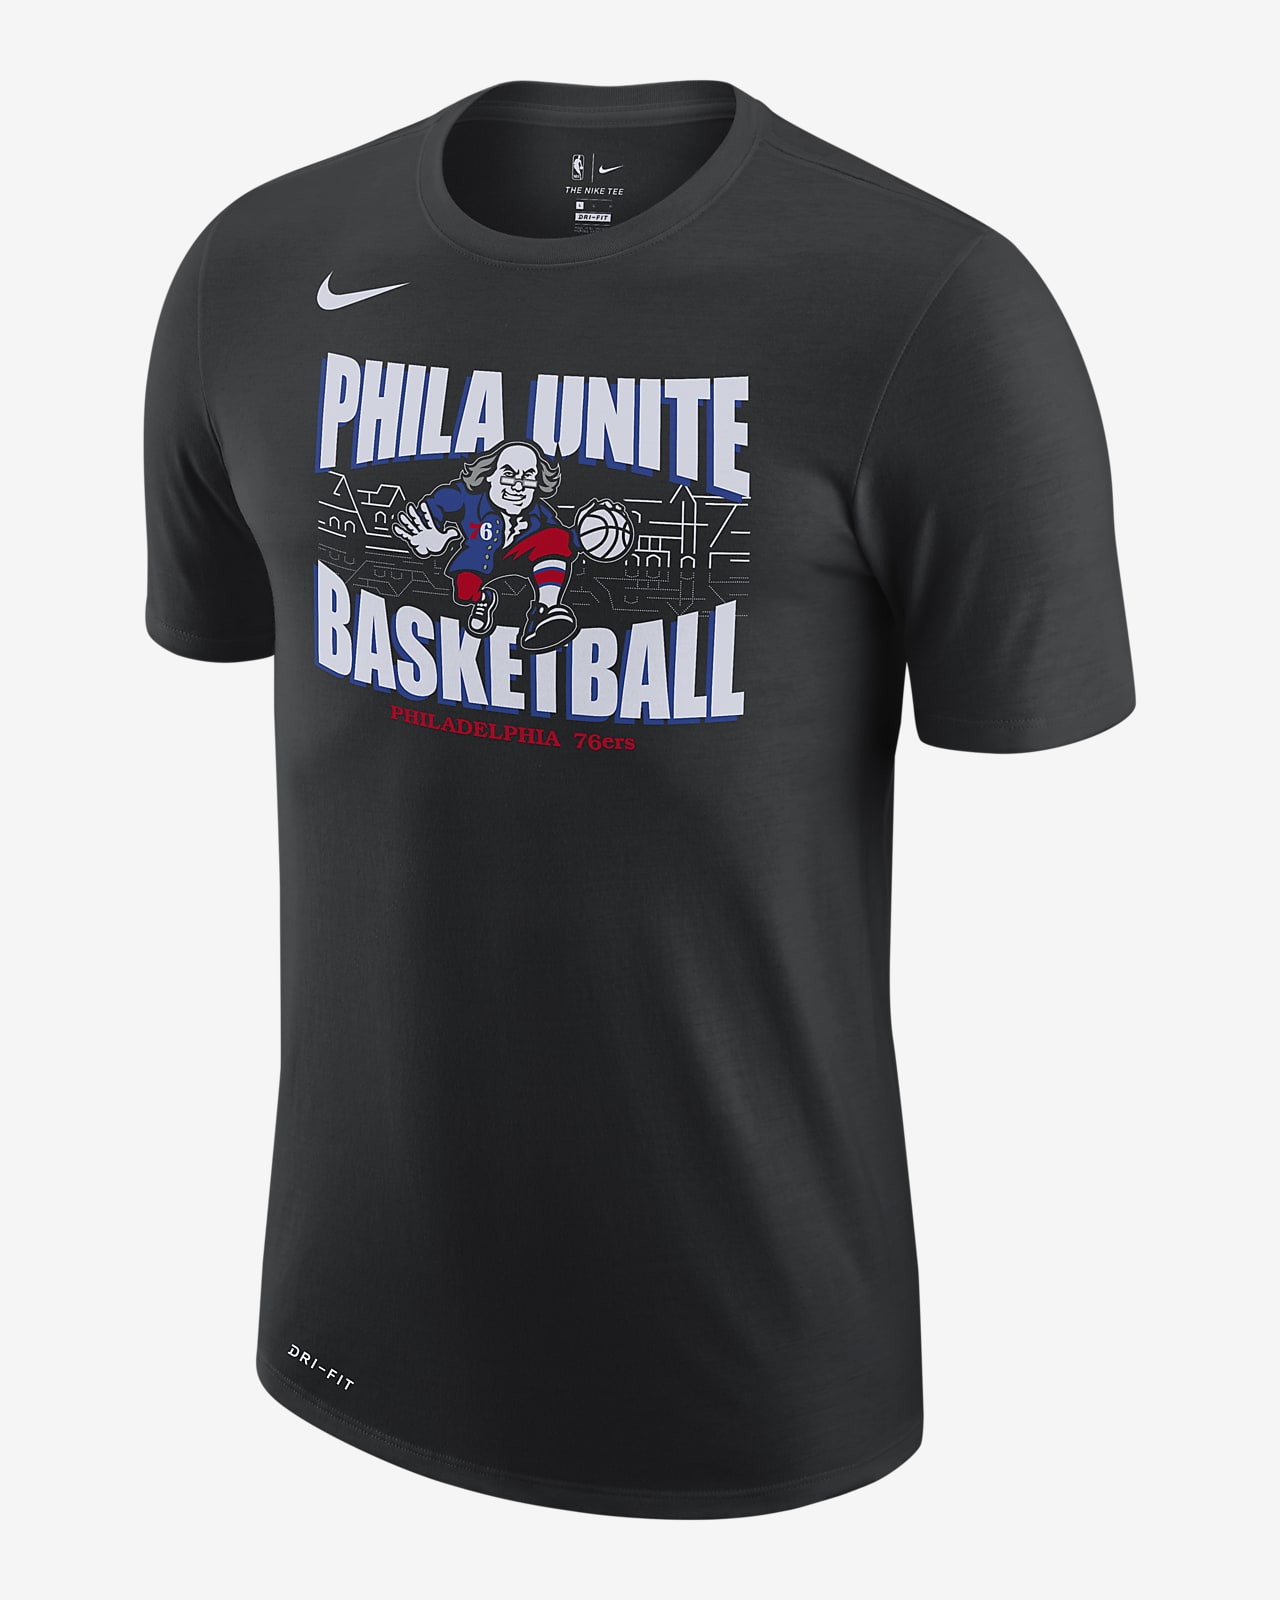 76ers city edition shirt